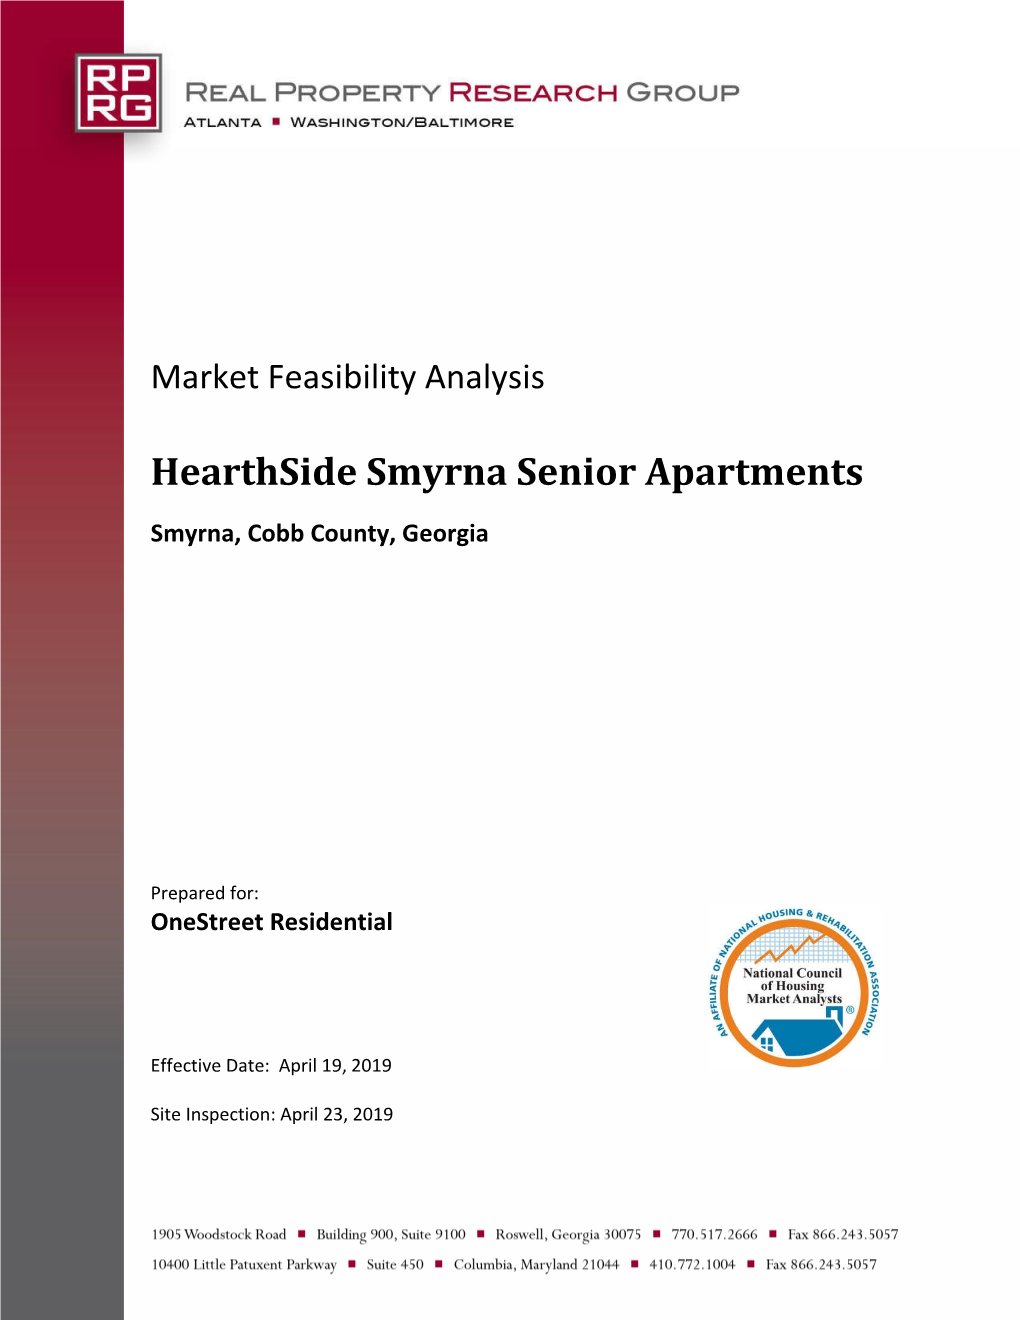 Hearthside Smyrna Senior Apartments